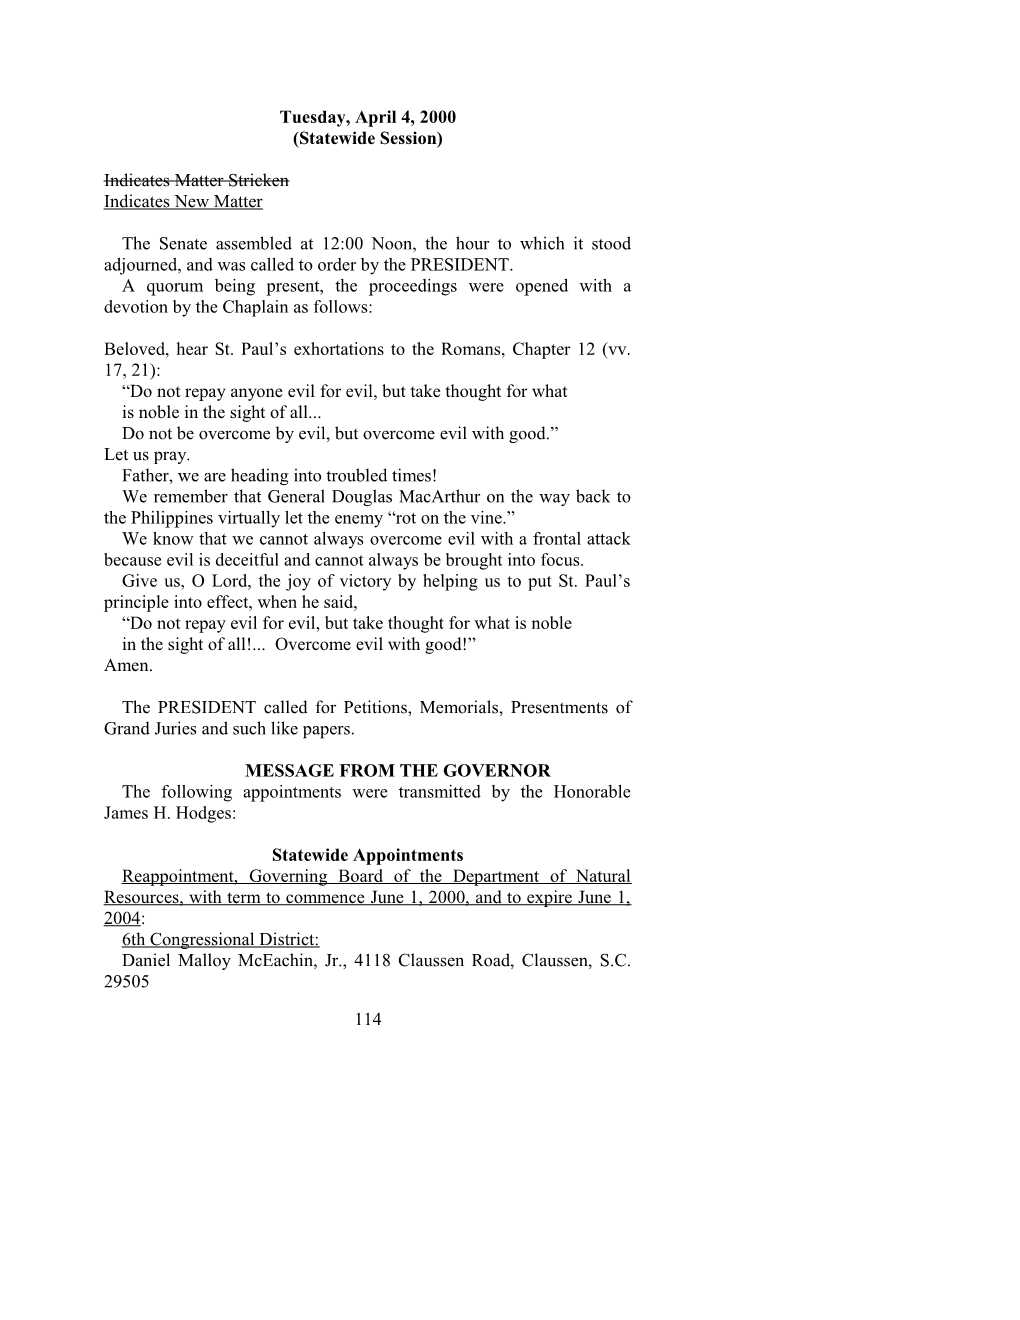 Senate Journal for Apr. 4, 2000 - South Carolina Legislature Online